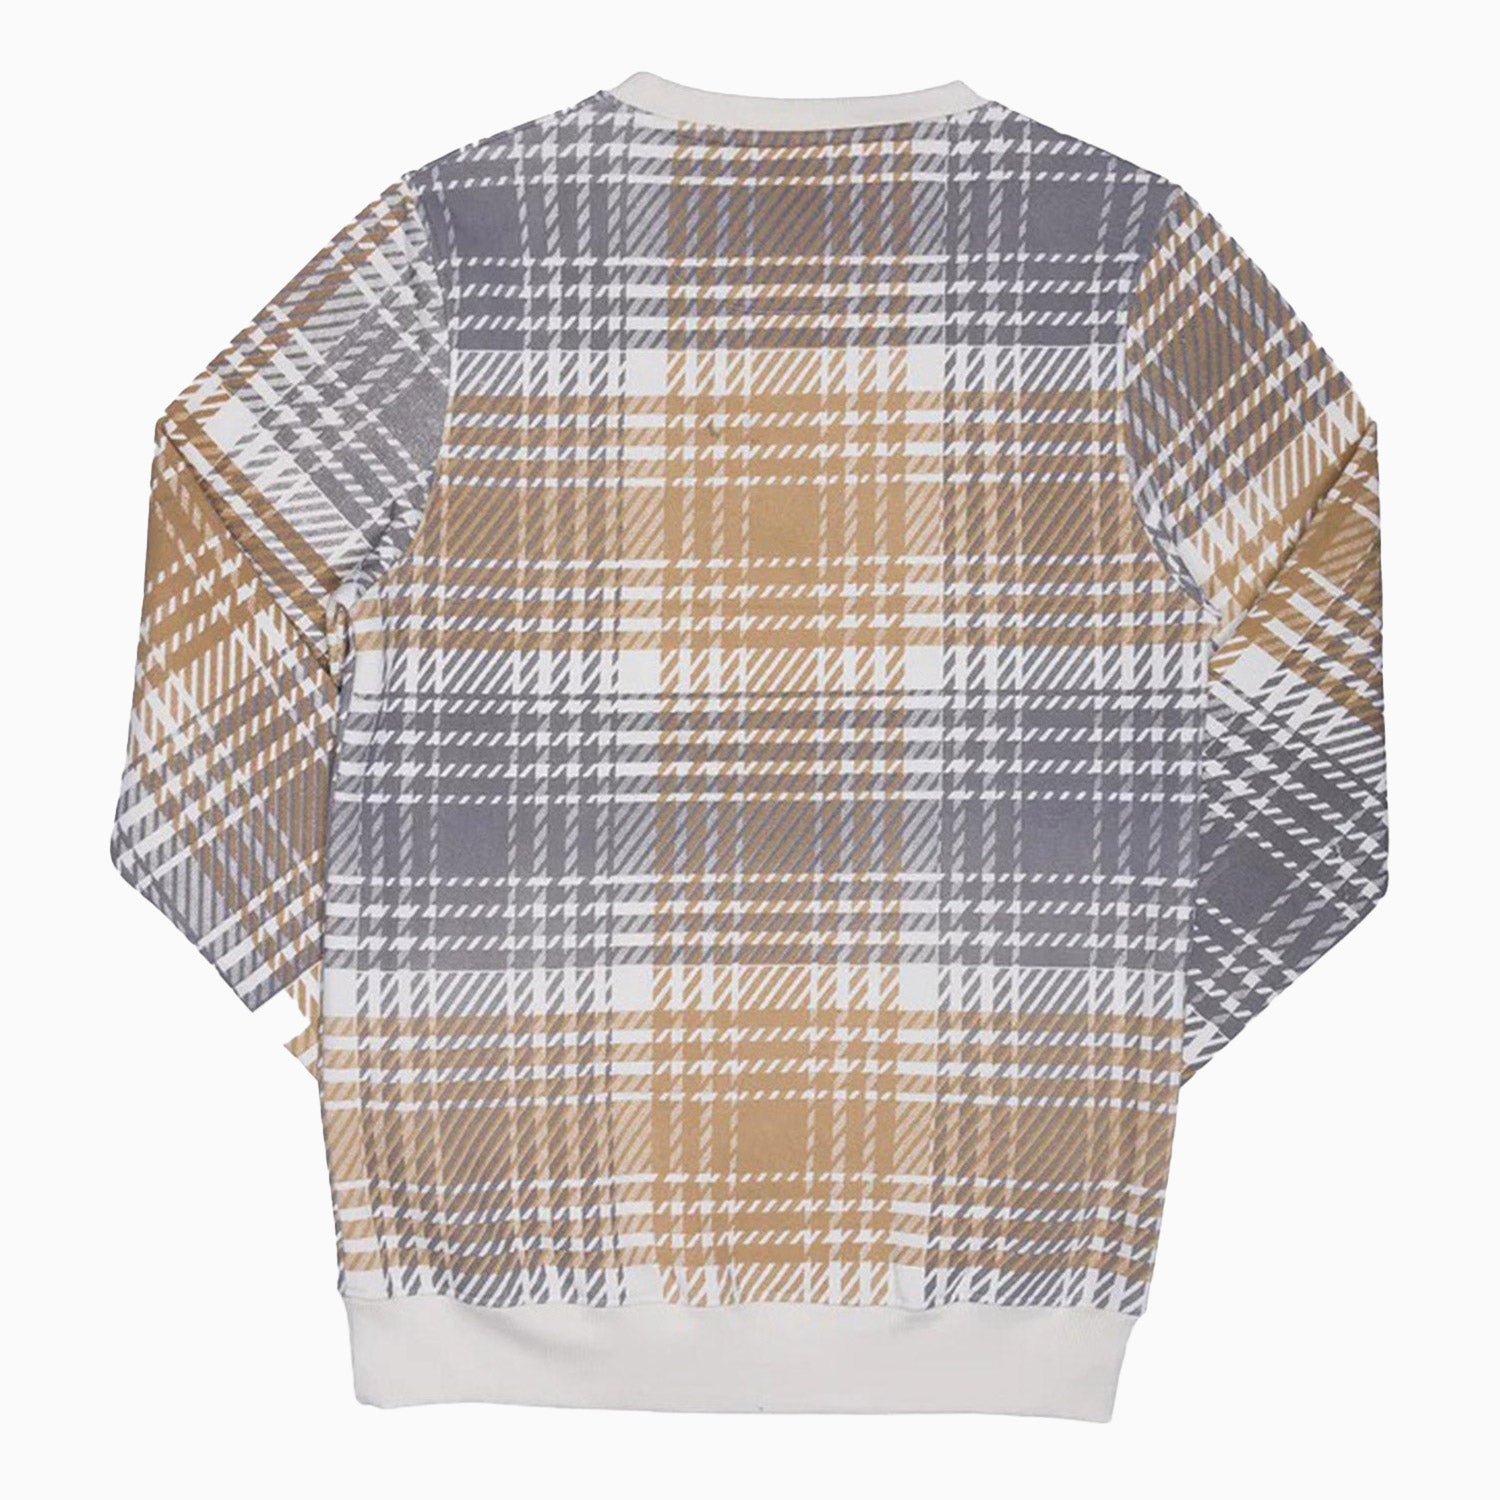 a-tiziano-mens-brady-graphic-print-knit-sweatshirt-24atc4004